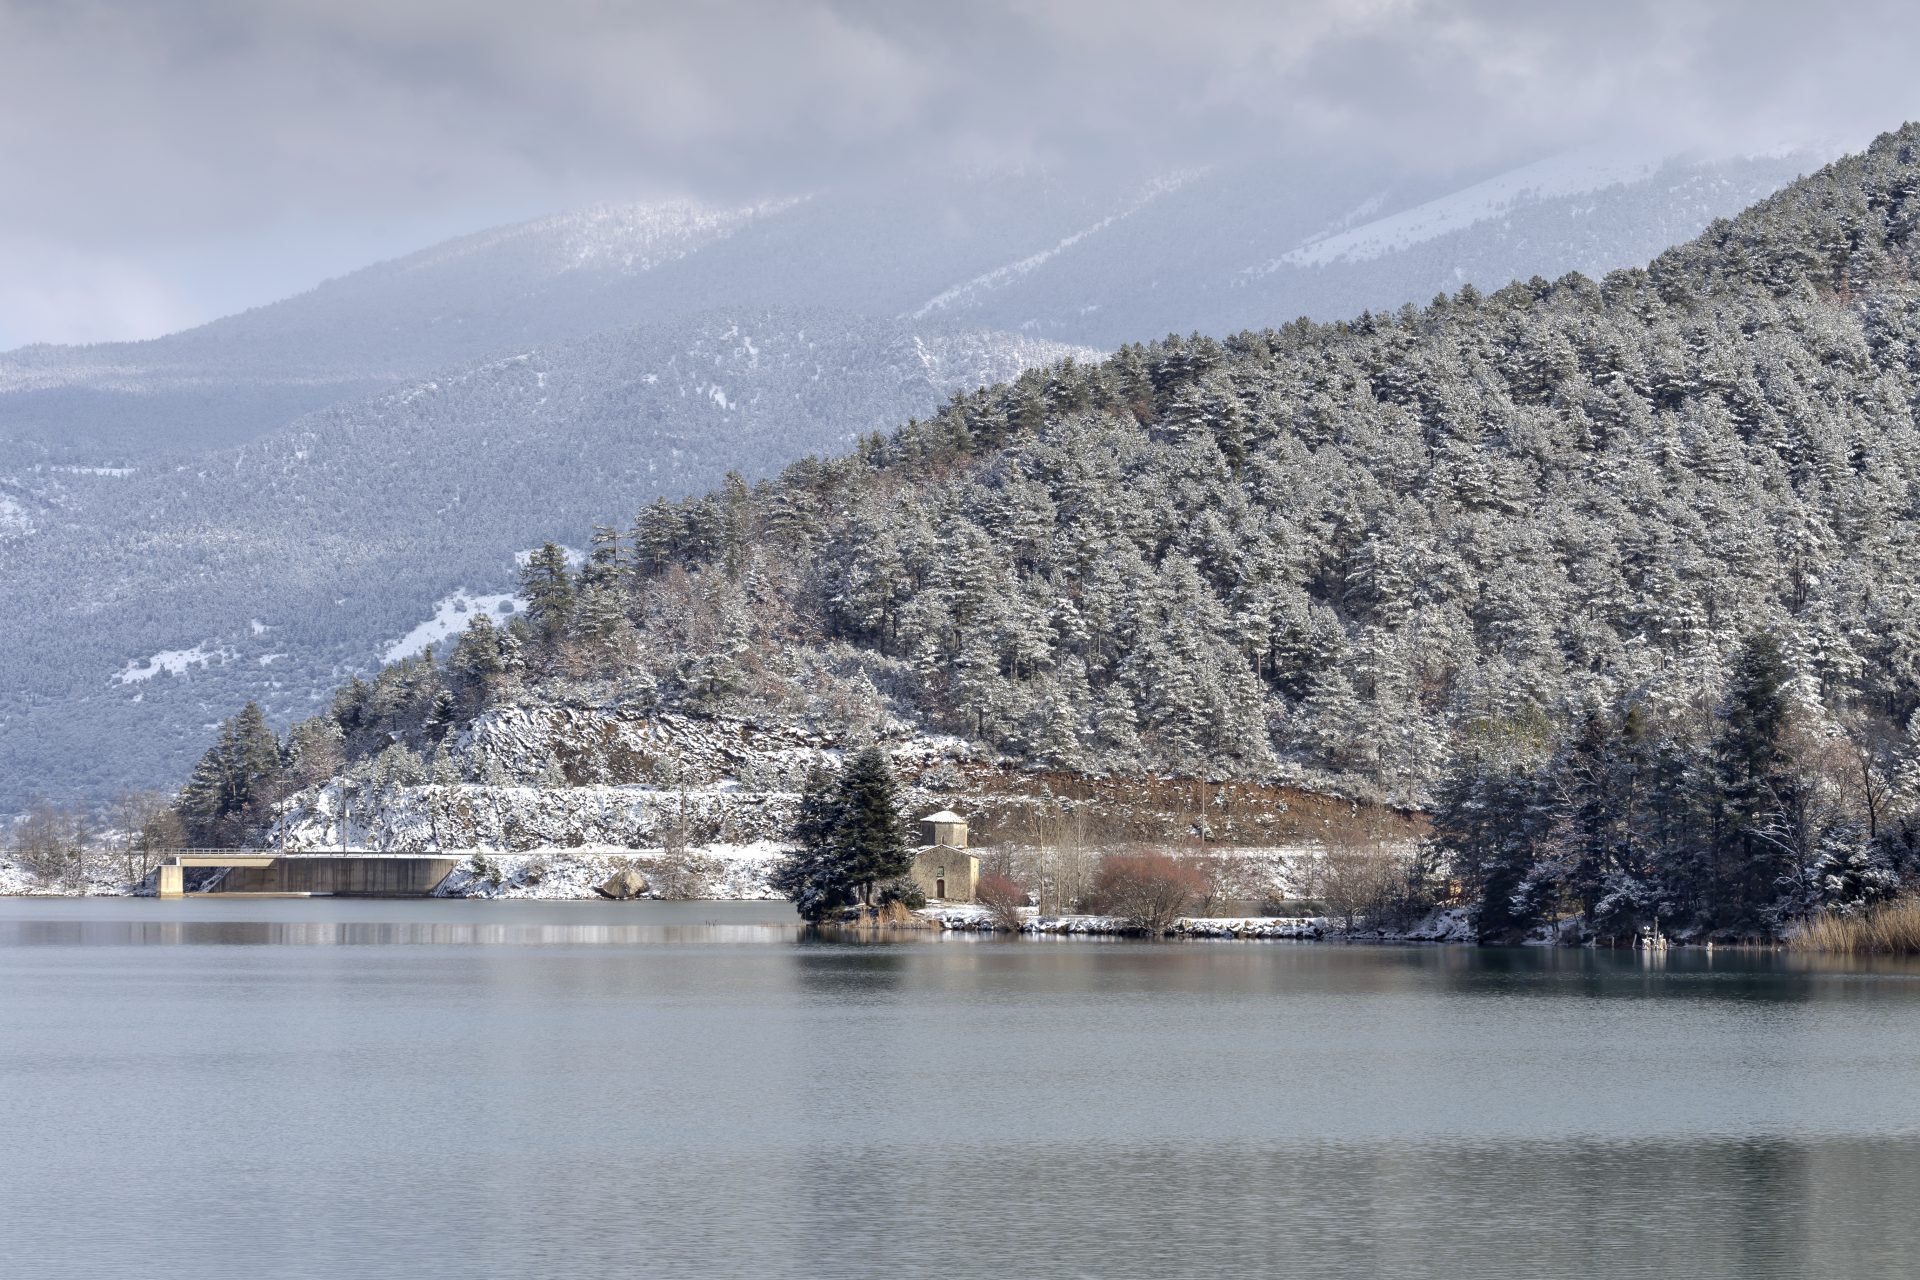 “Winter Wonderland: Corinth’s Charming Winter Retreats”